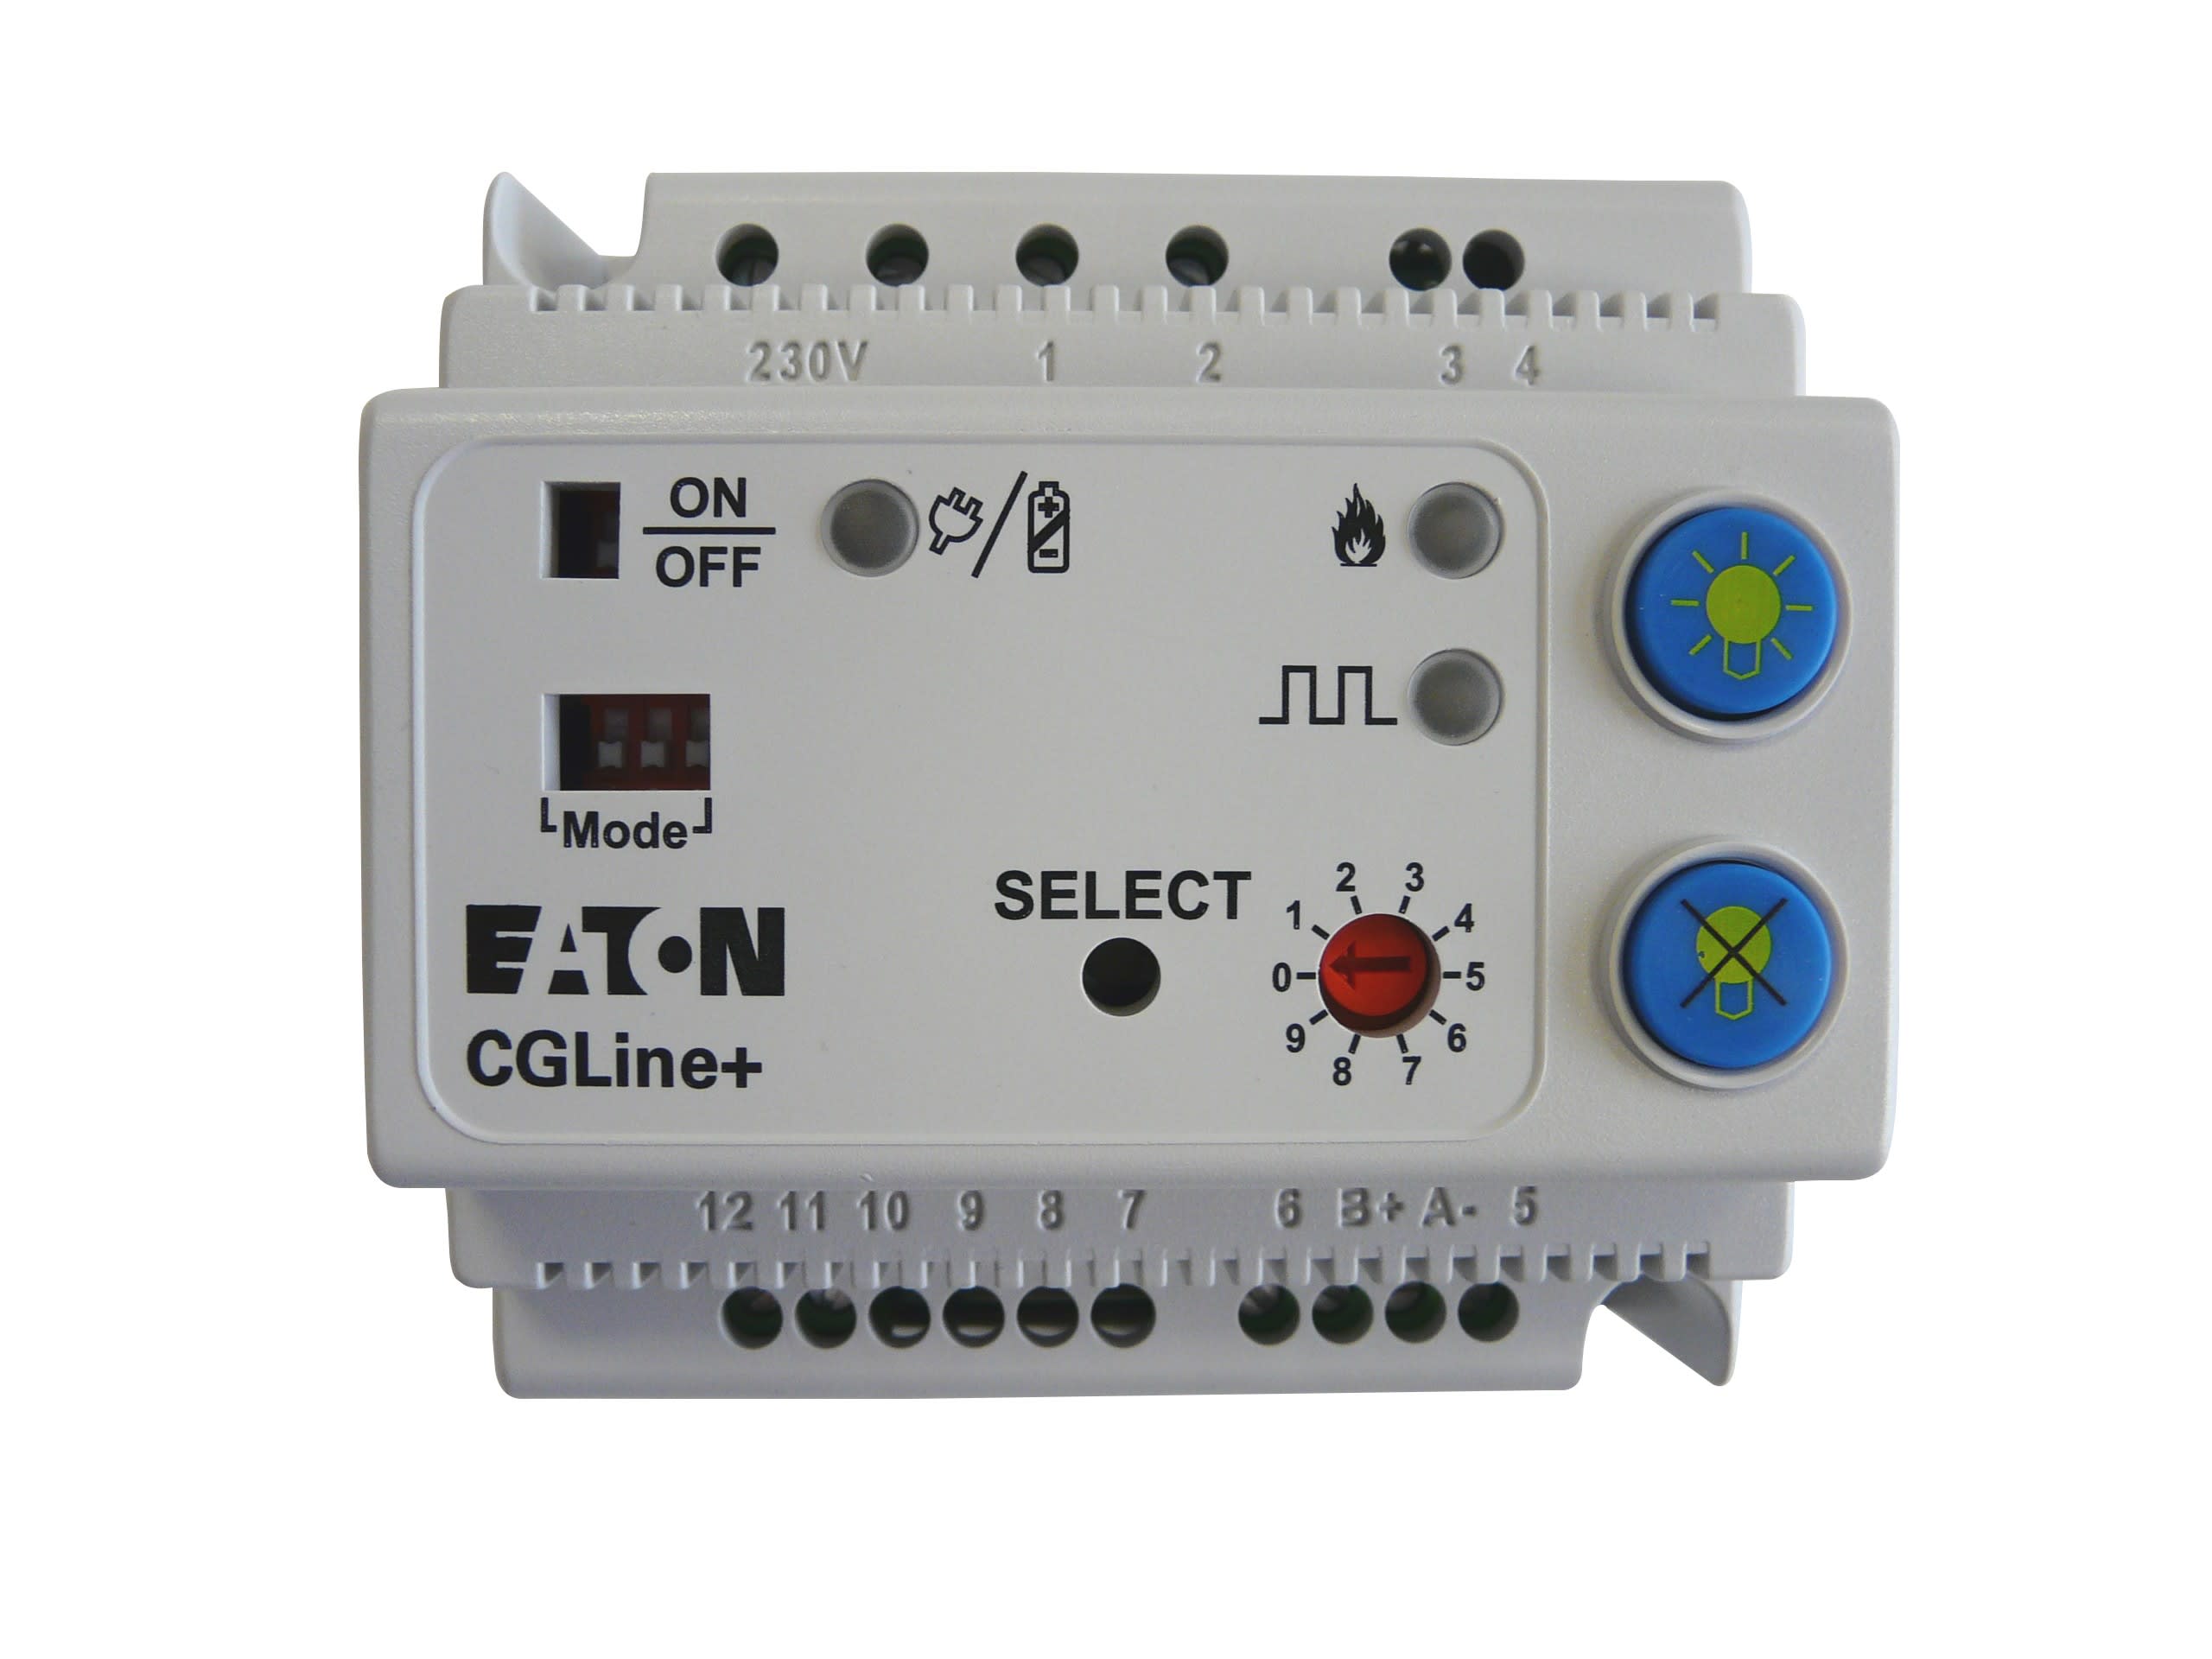 Cooper Securite - Télécommande TL CGLine+ pour installation adressable protocole CGLine+